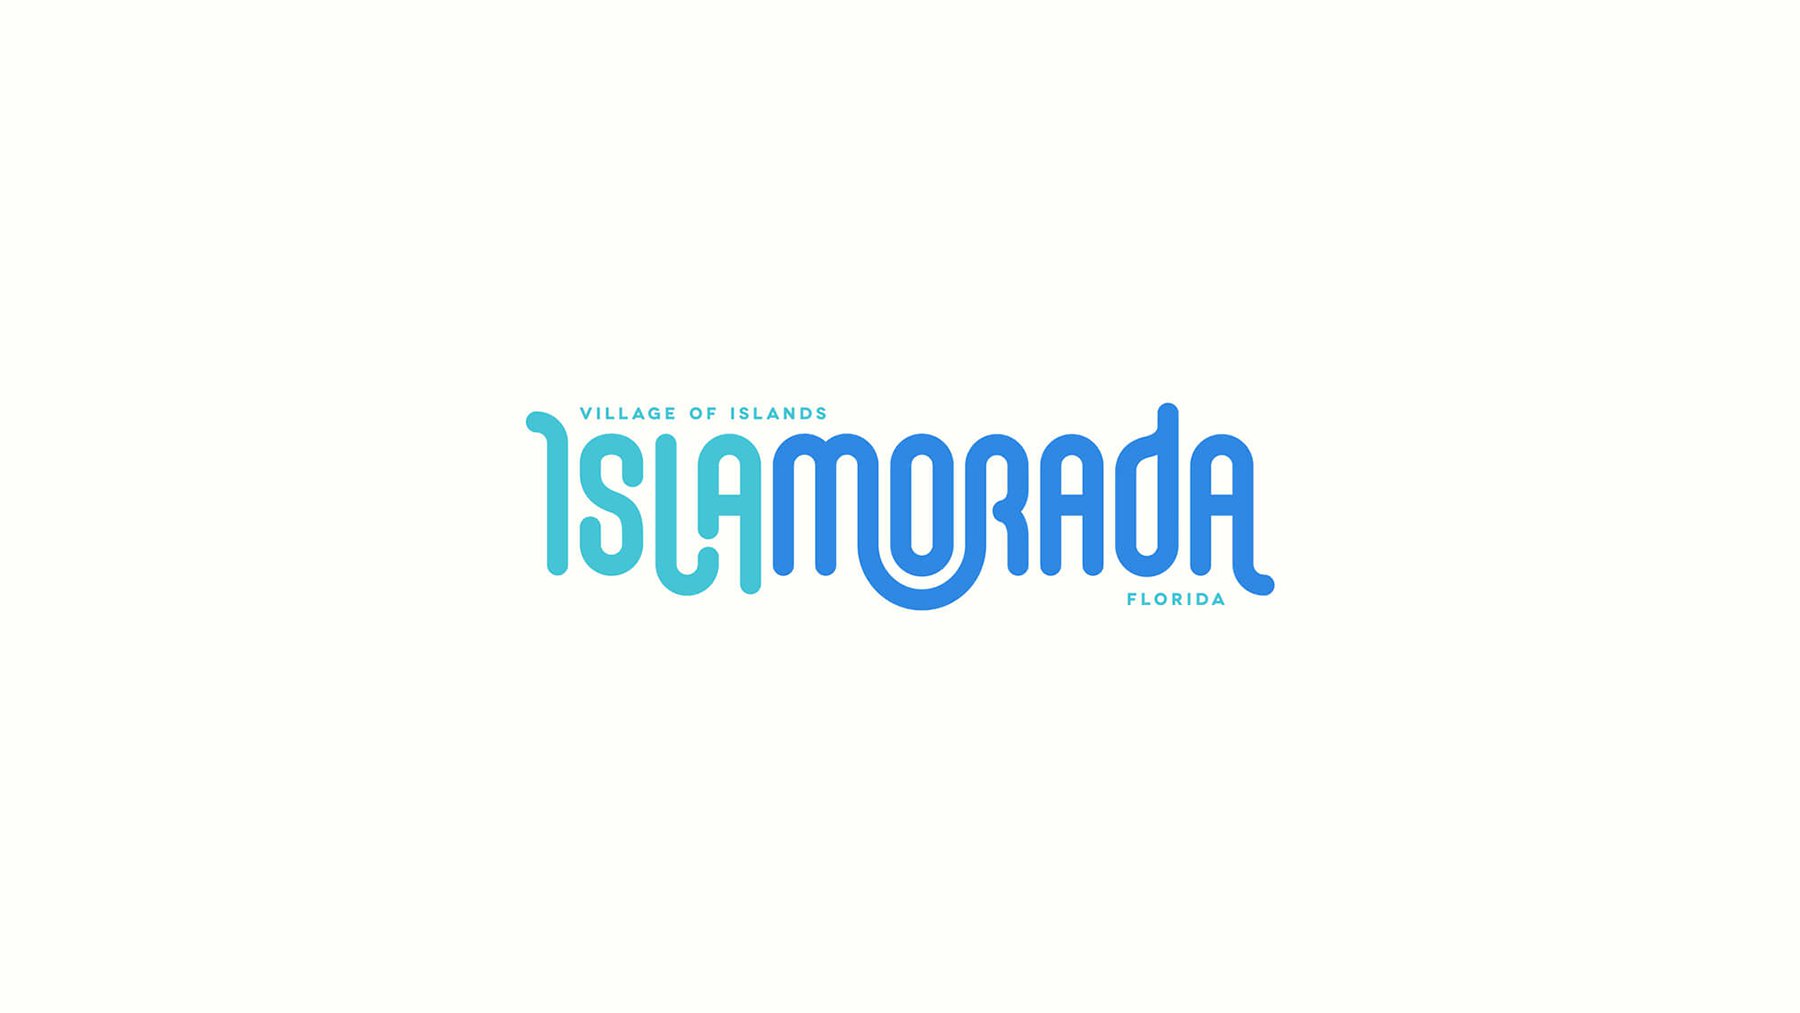 Islamorada brand